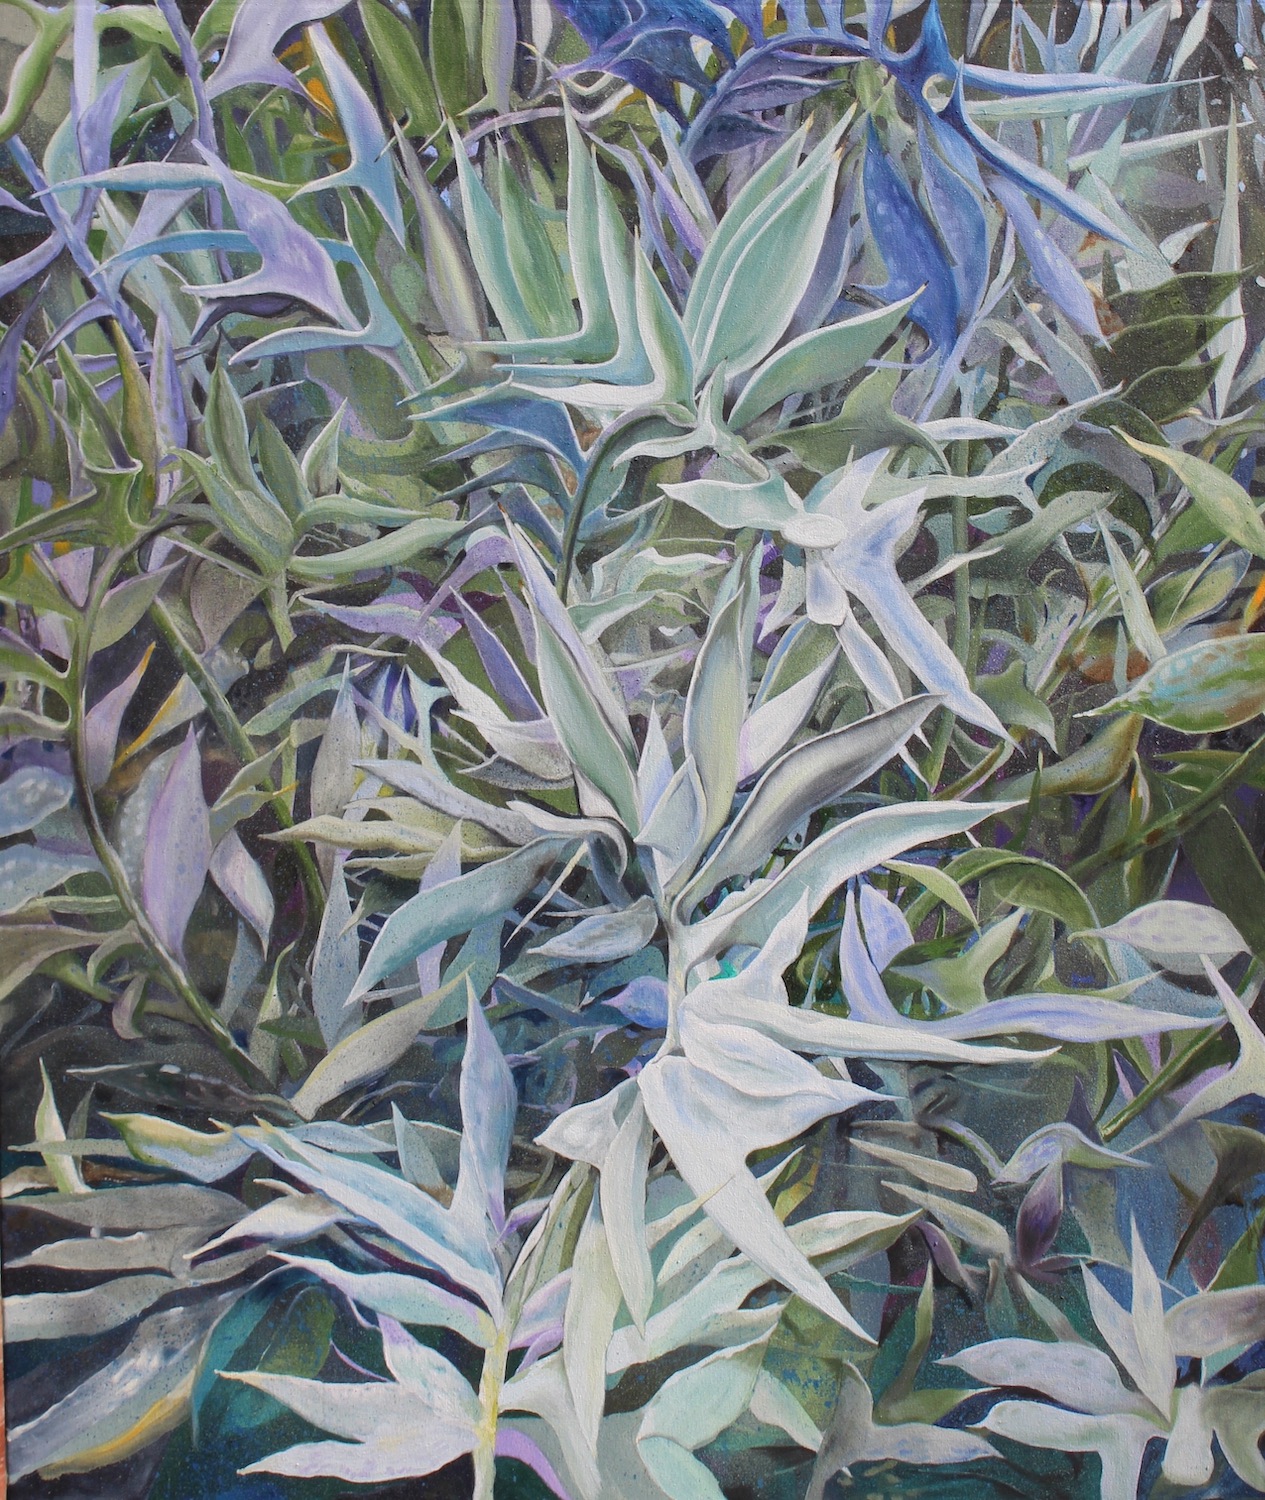 'Encephalartus 1', Bill Mangan, Oil on canvas, 120 x 100 cm